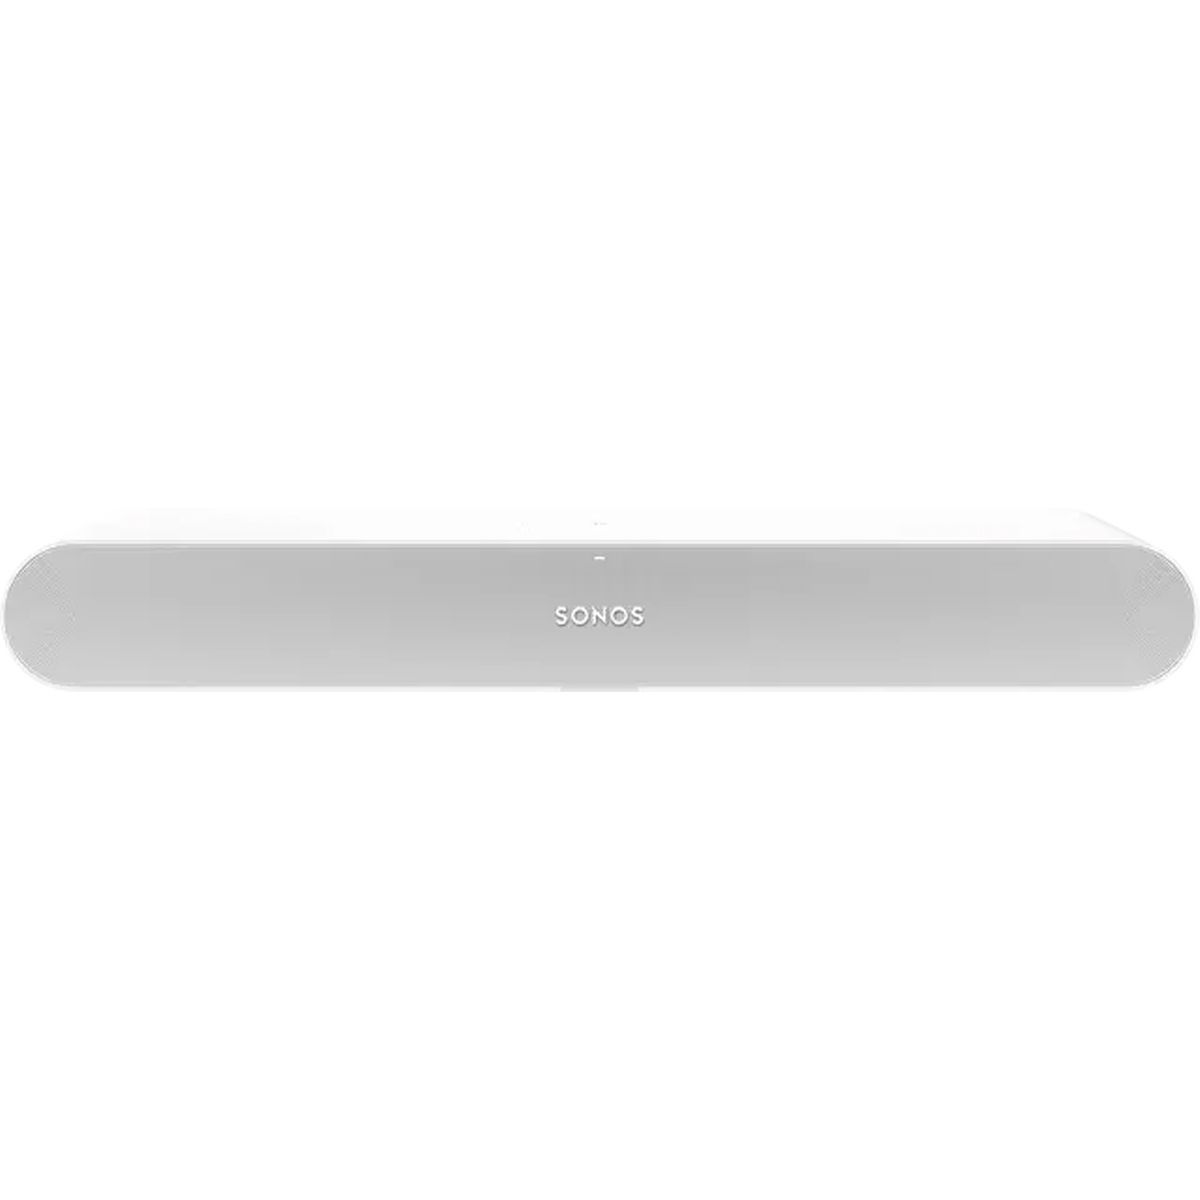 Sonos Ray Compact Soundbar - White - front view